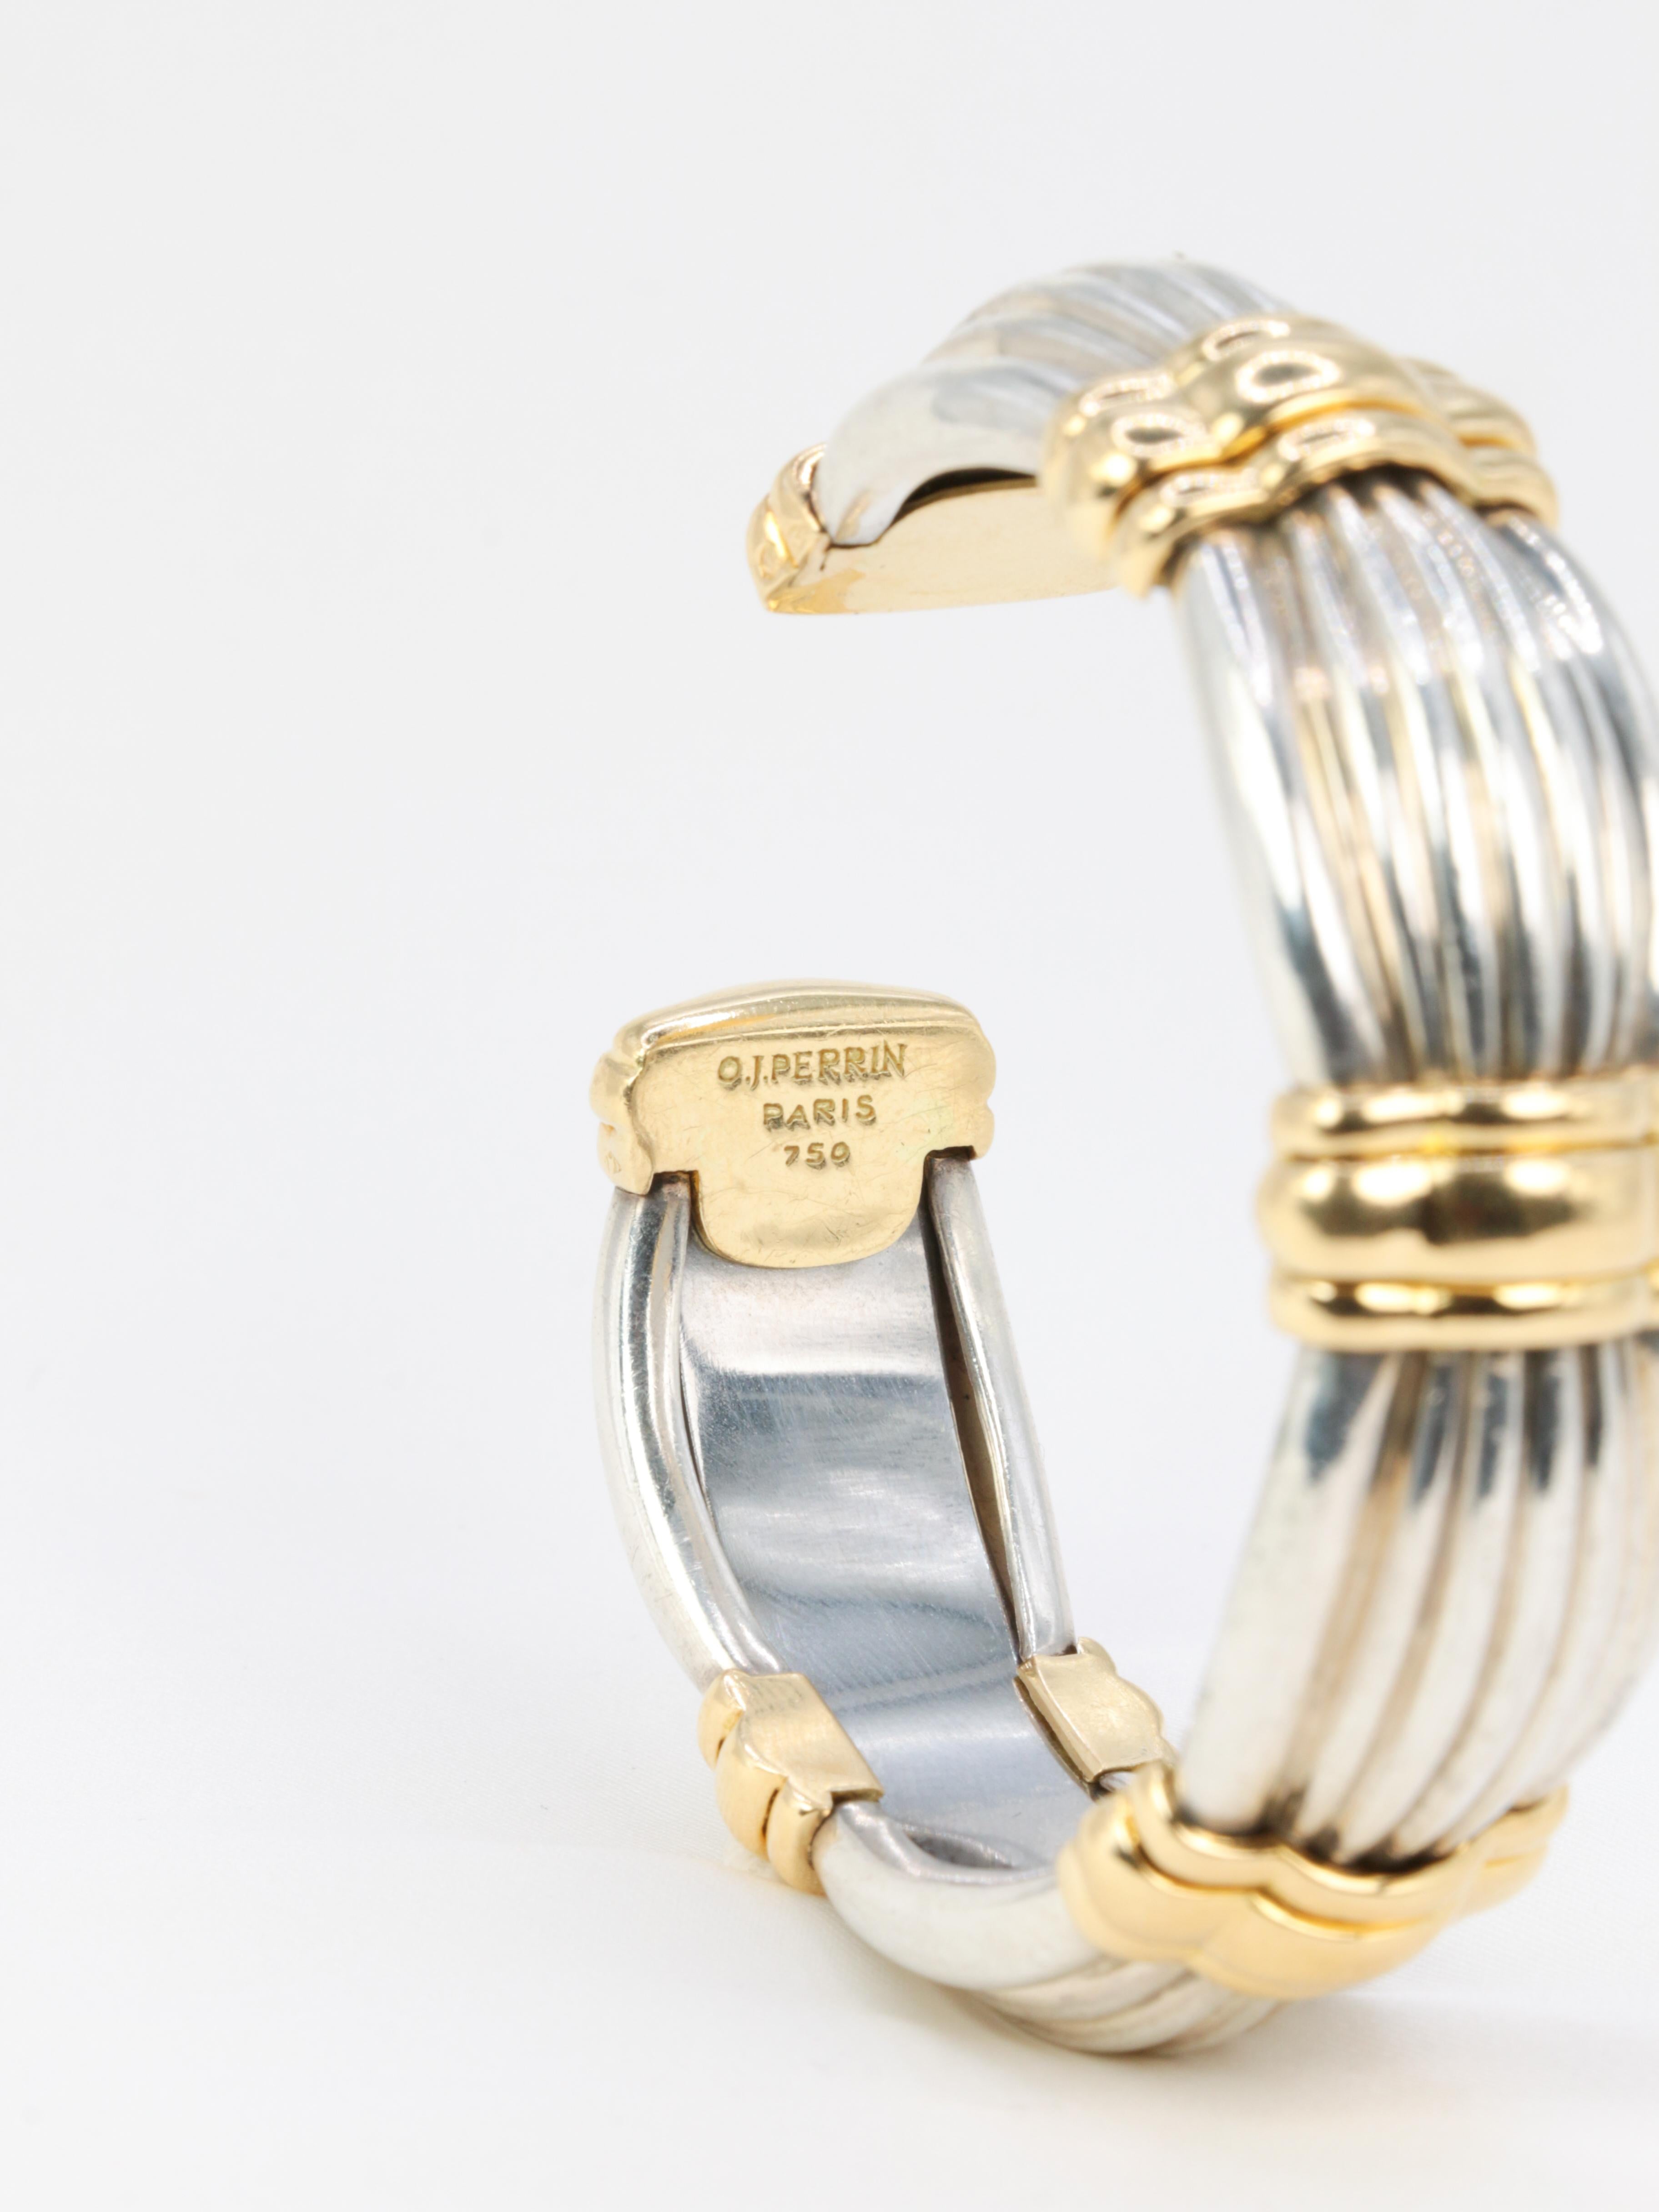 O.J. Perrin Semi-Rigid Bracelet in Gold and Silver 1